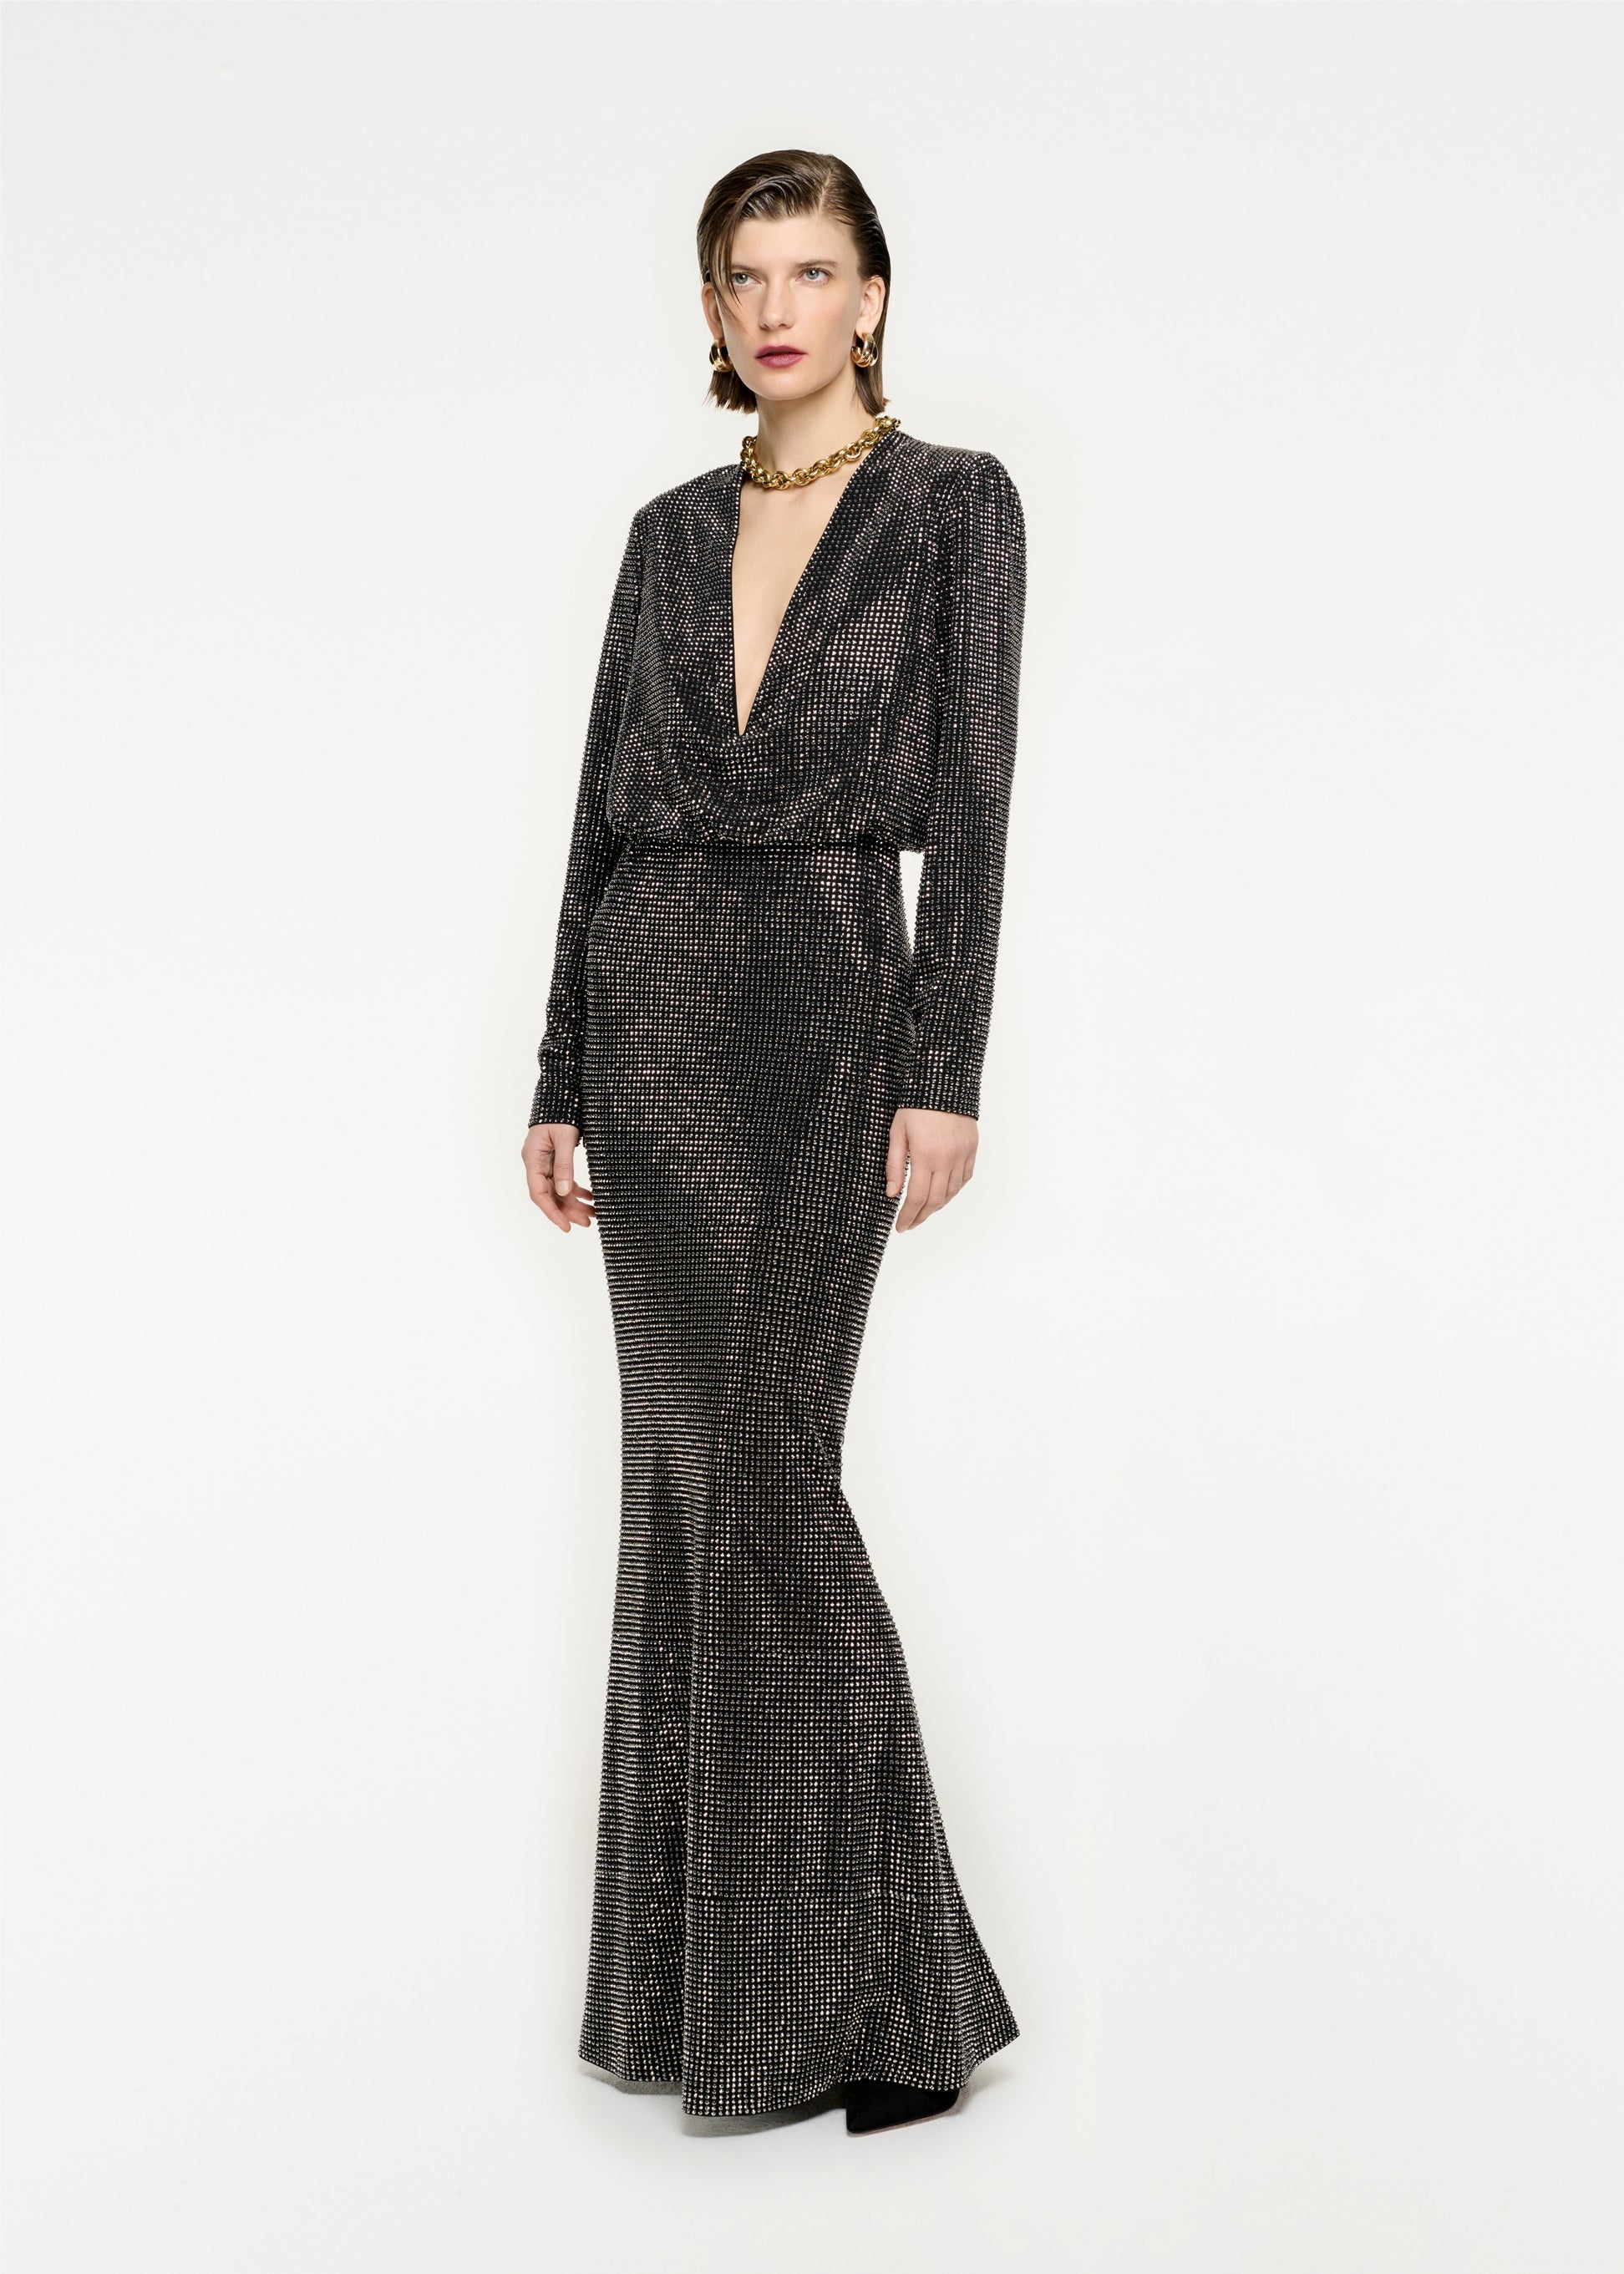 Woman wearing the Long Sleeve Diamante Maxi Dress in Black